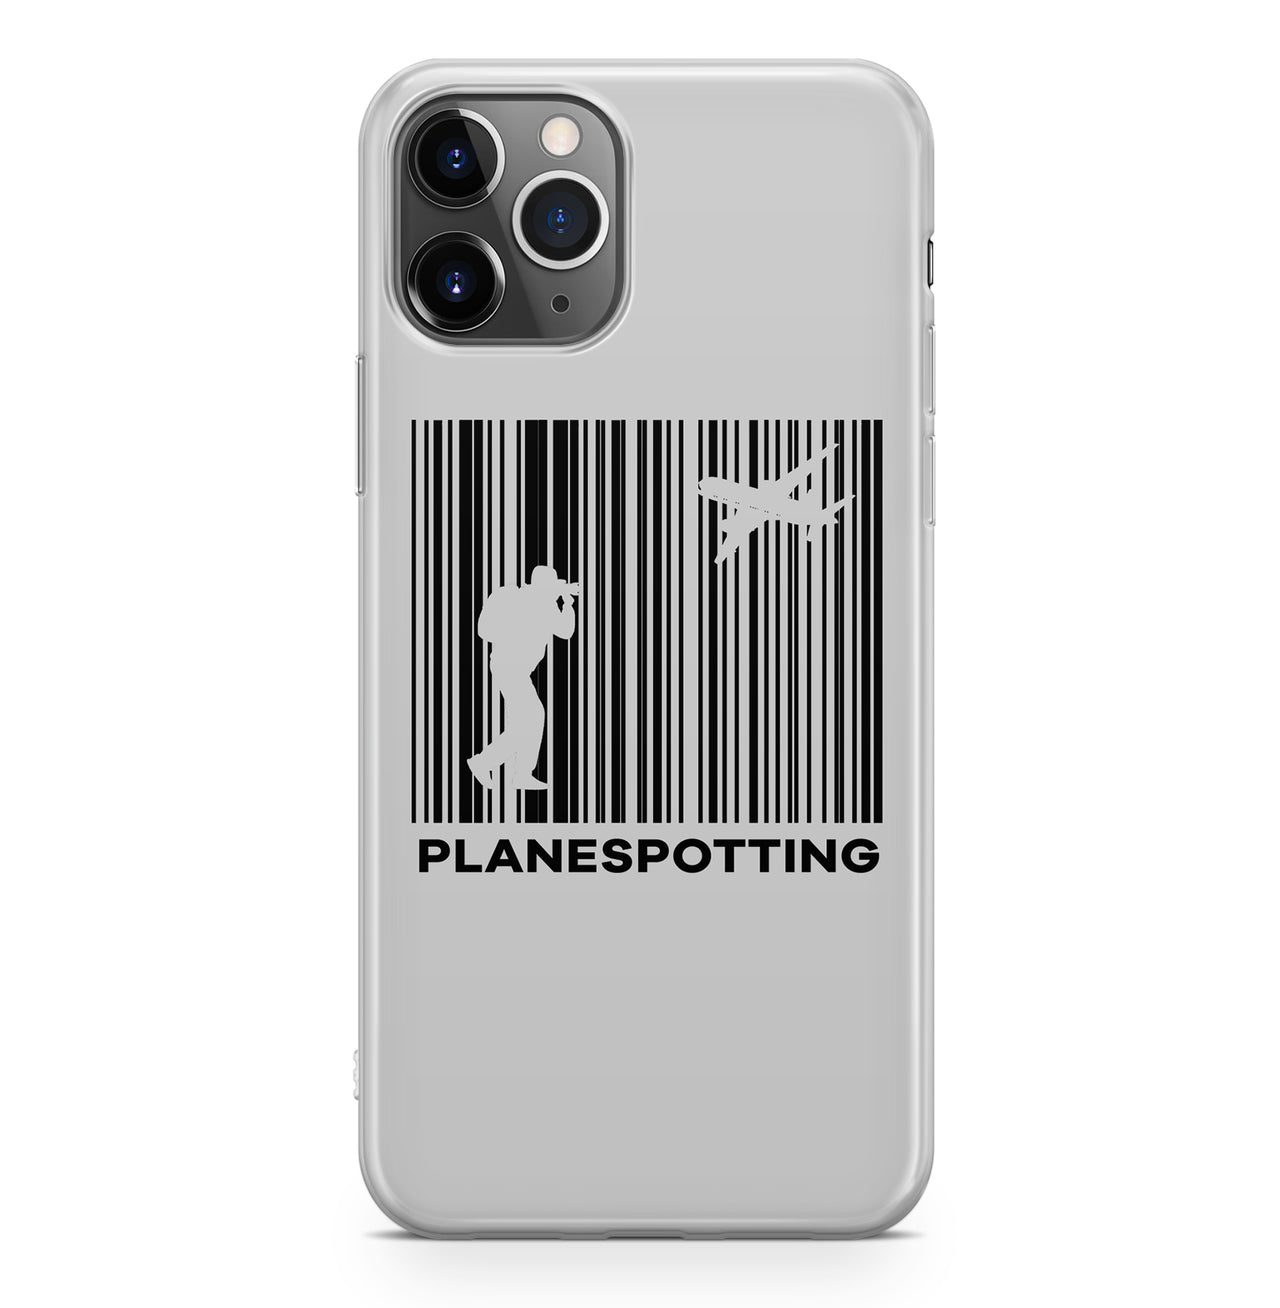 Planespotting Designed iPhone Cases